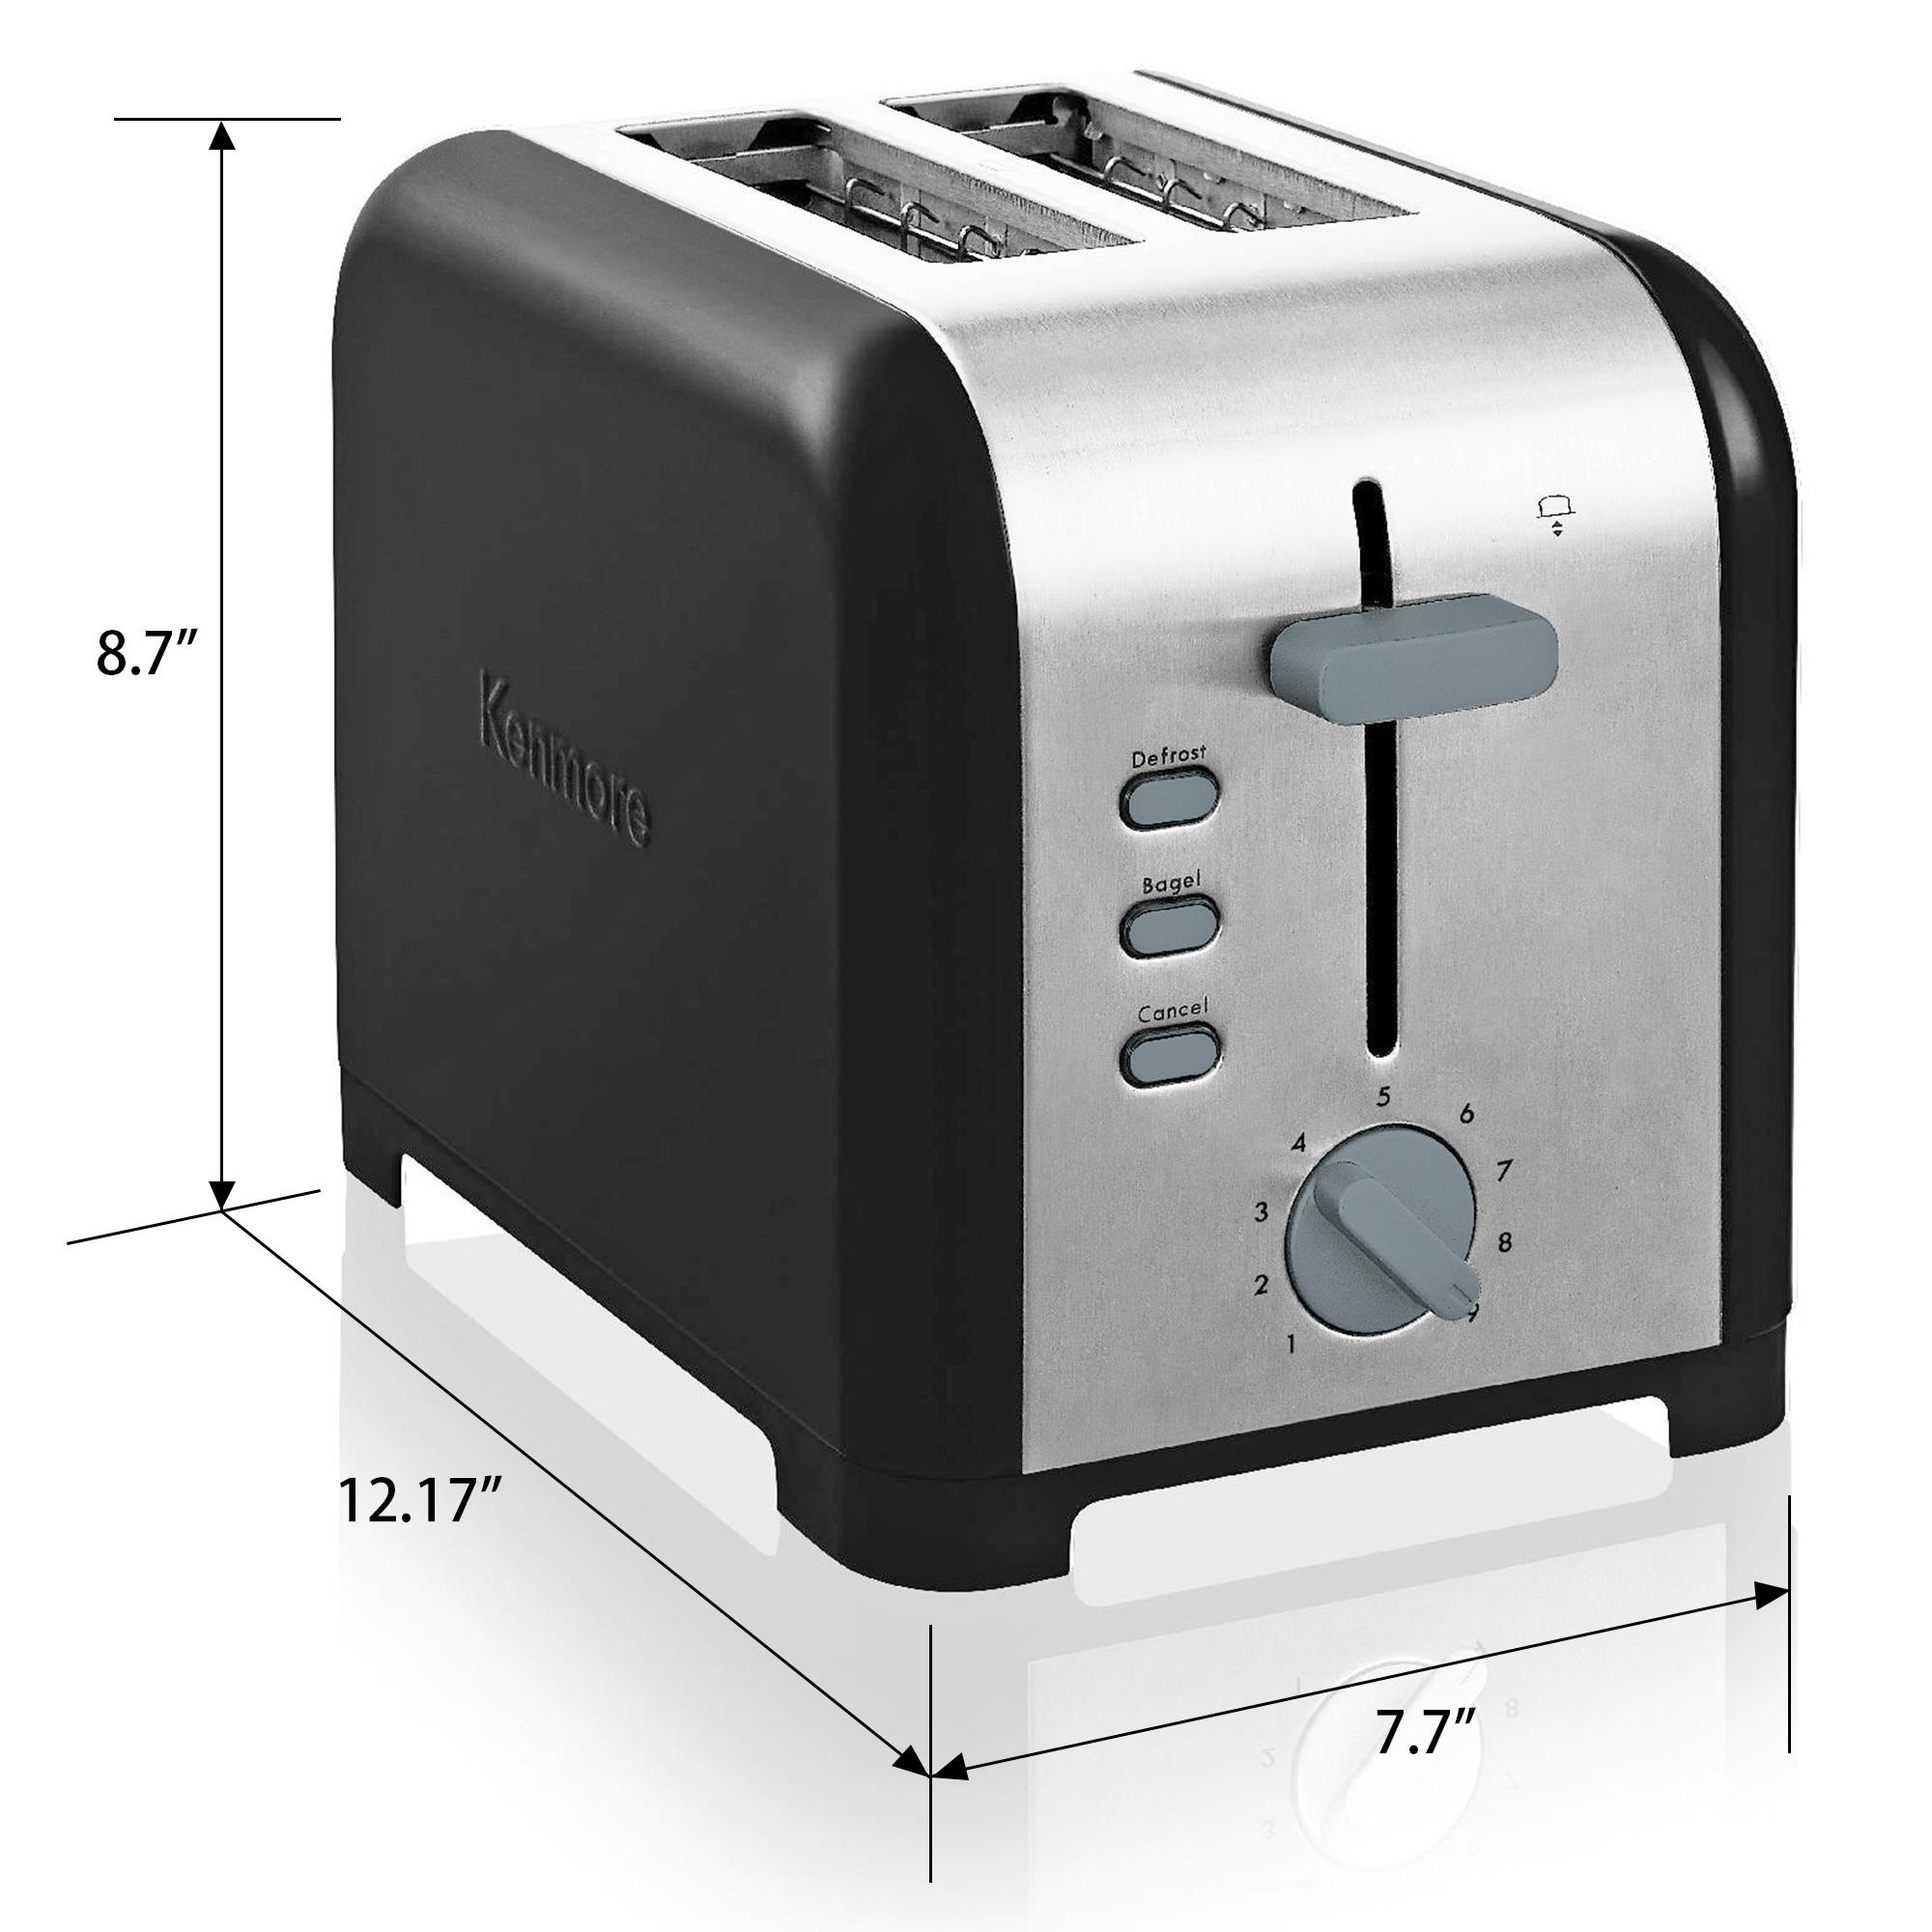 Kenmore Elite 4-Slice Silver 1600-Watt Toaster in the Toasters department  at